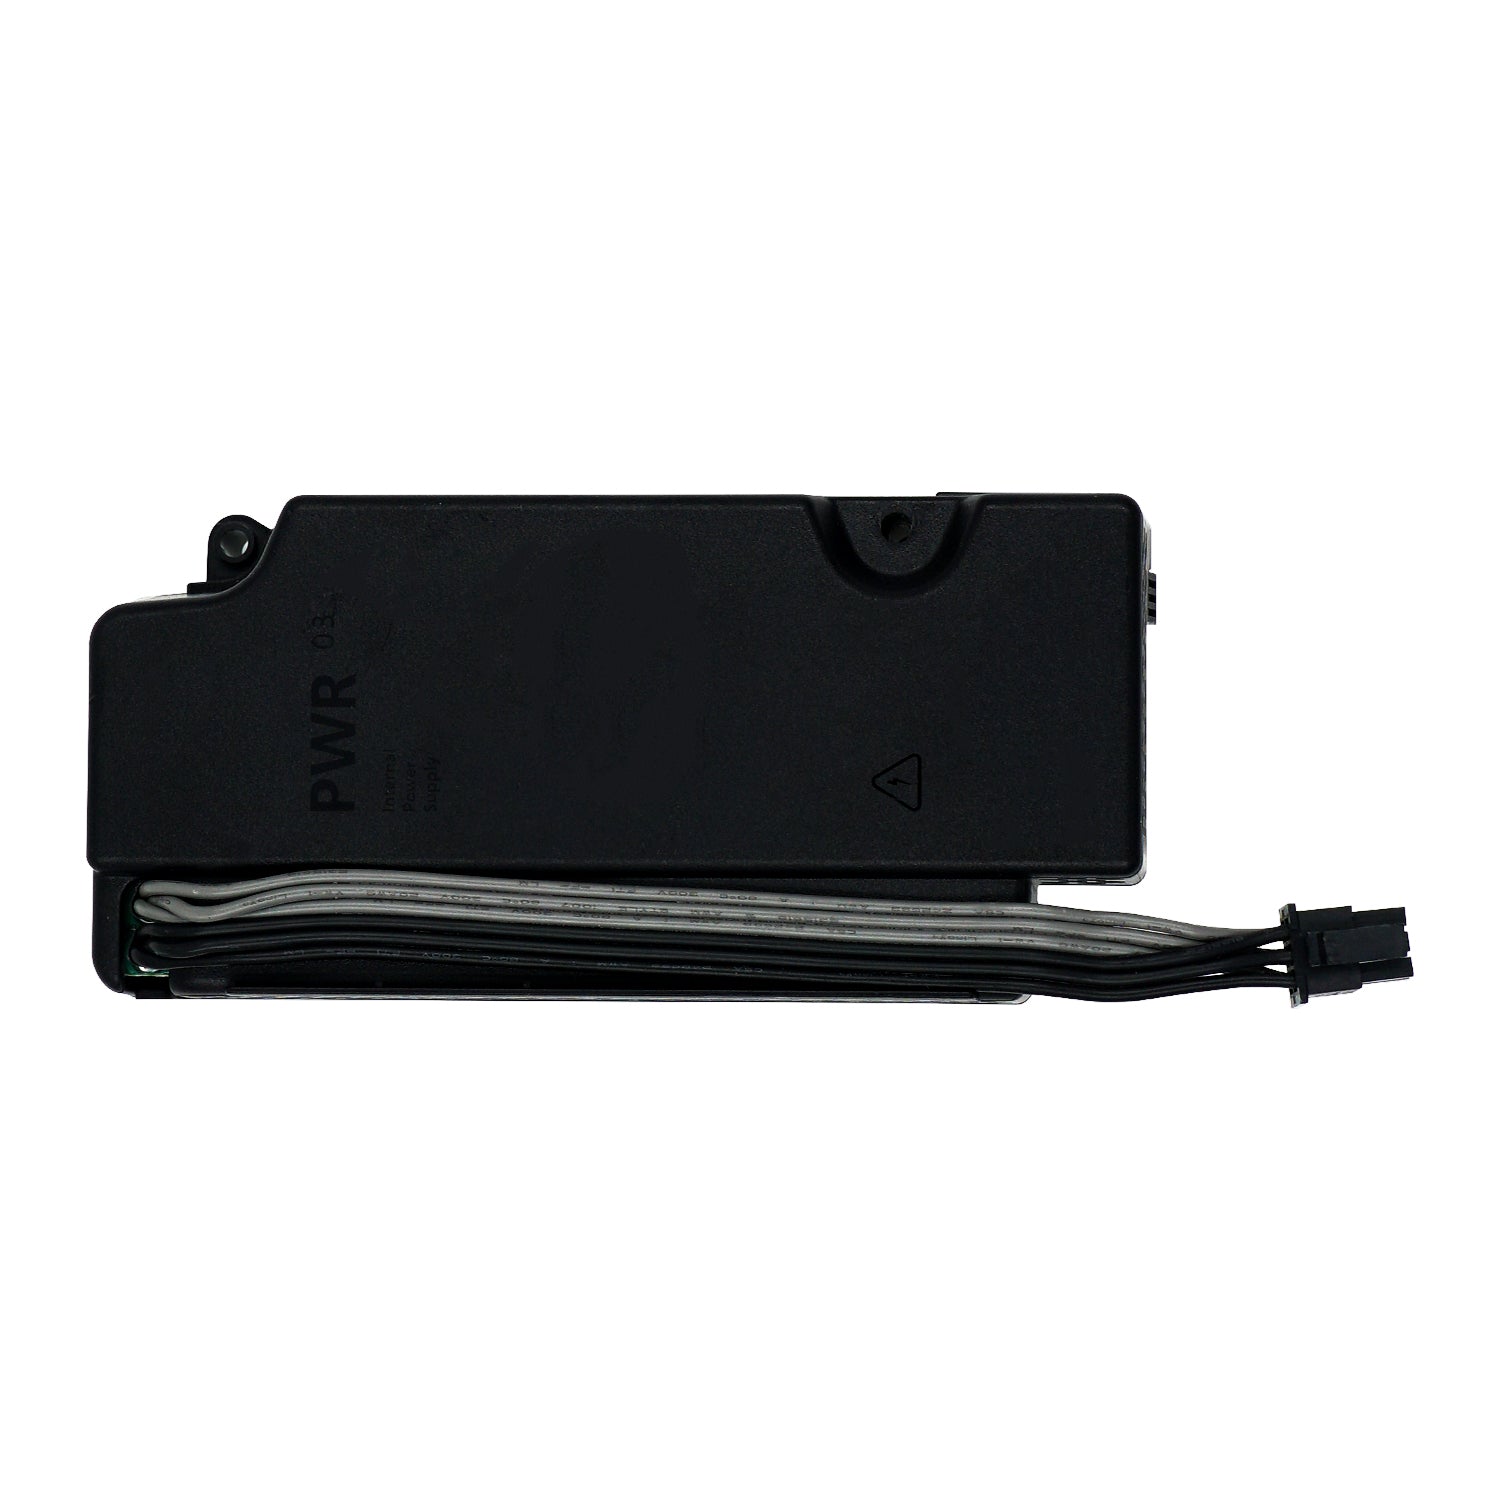 Genuine Replacement Internal Power Supply AC Adapter Microsoft Xbox One S  SLIM